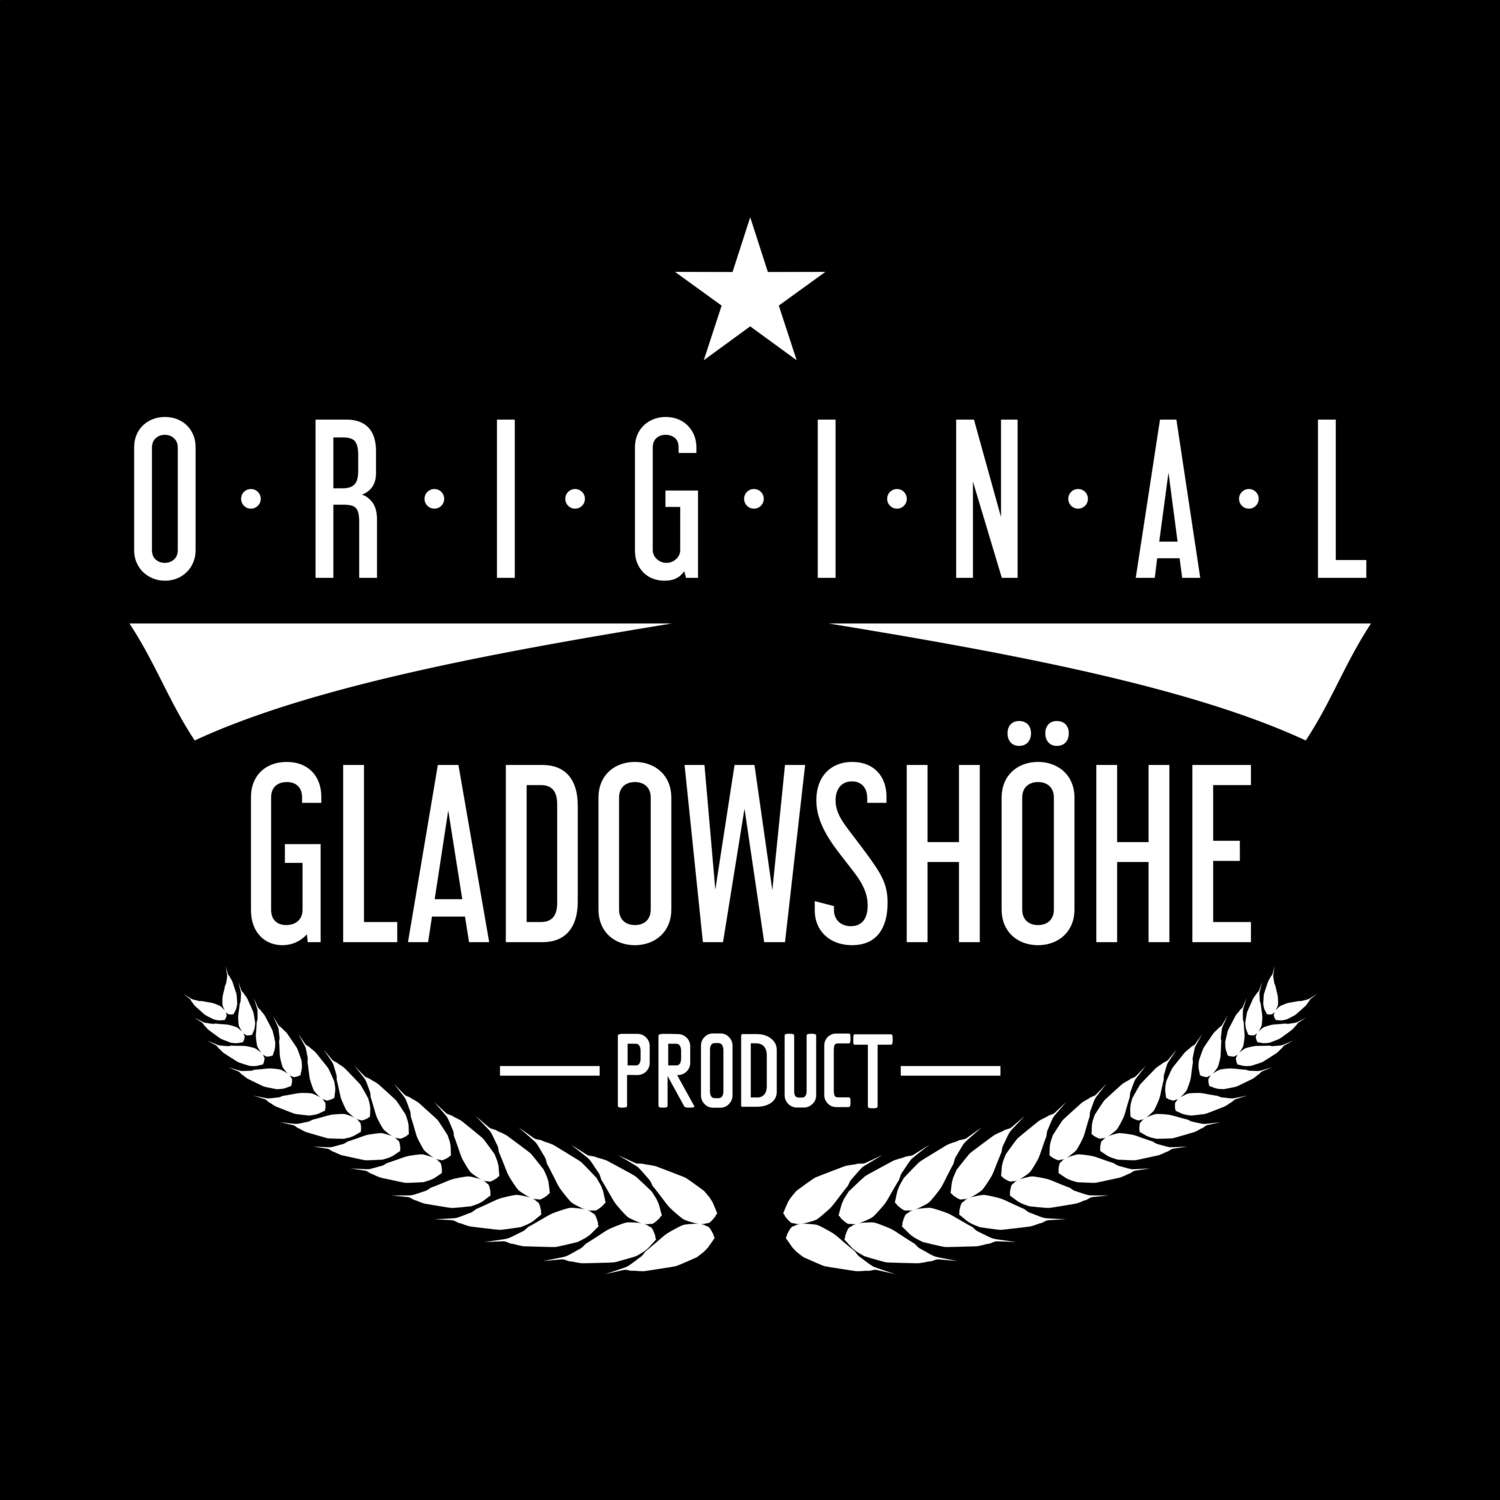 Gladowshöhe T-Shirt »Original Product«